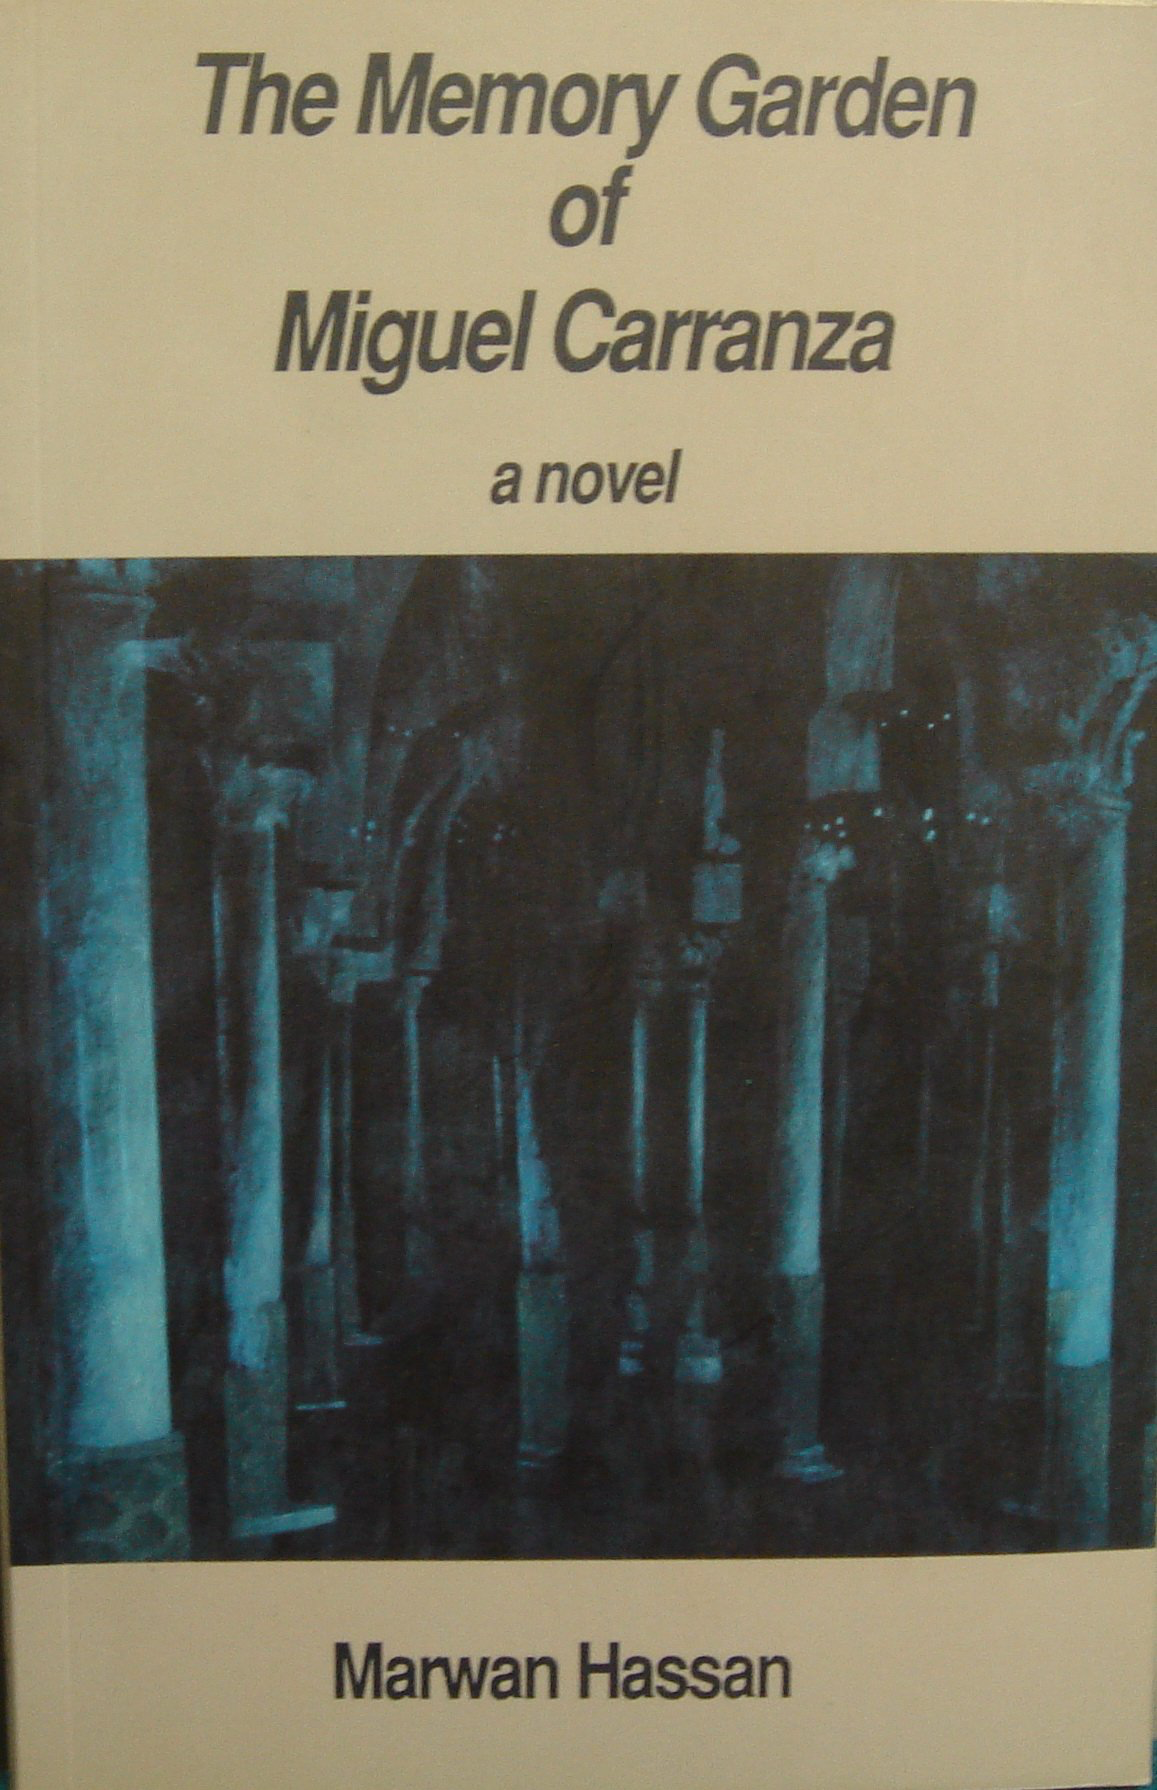 The Memory Garden of Miguel Carranza